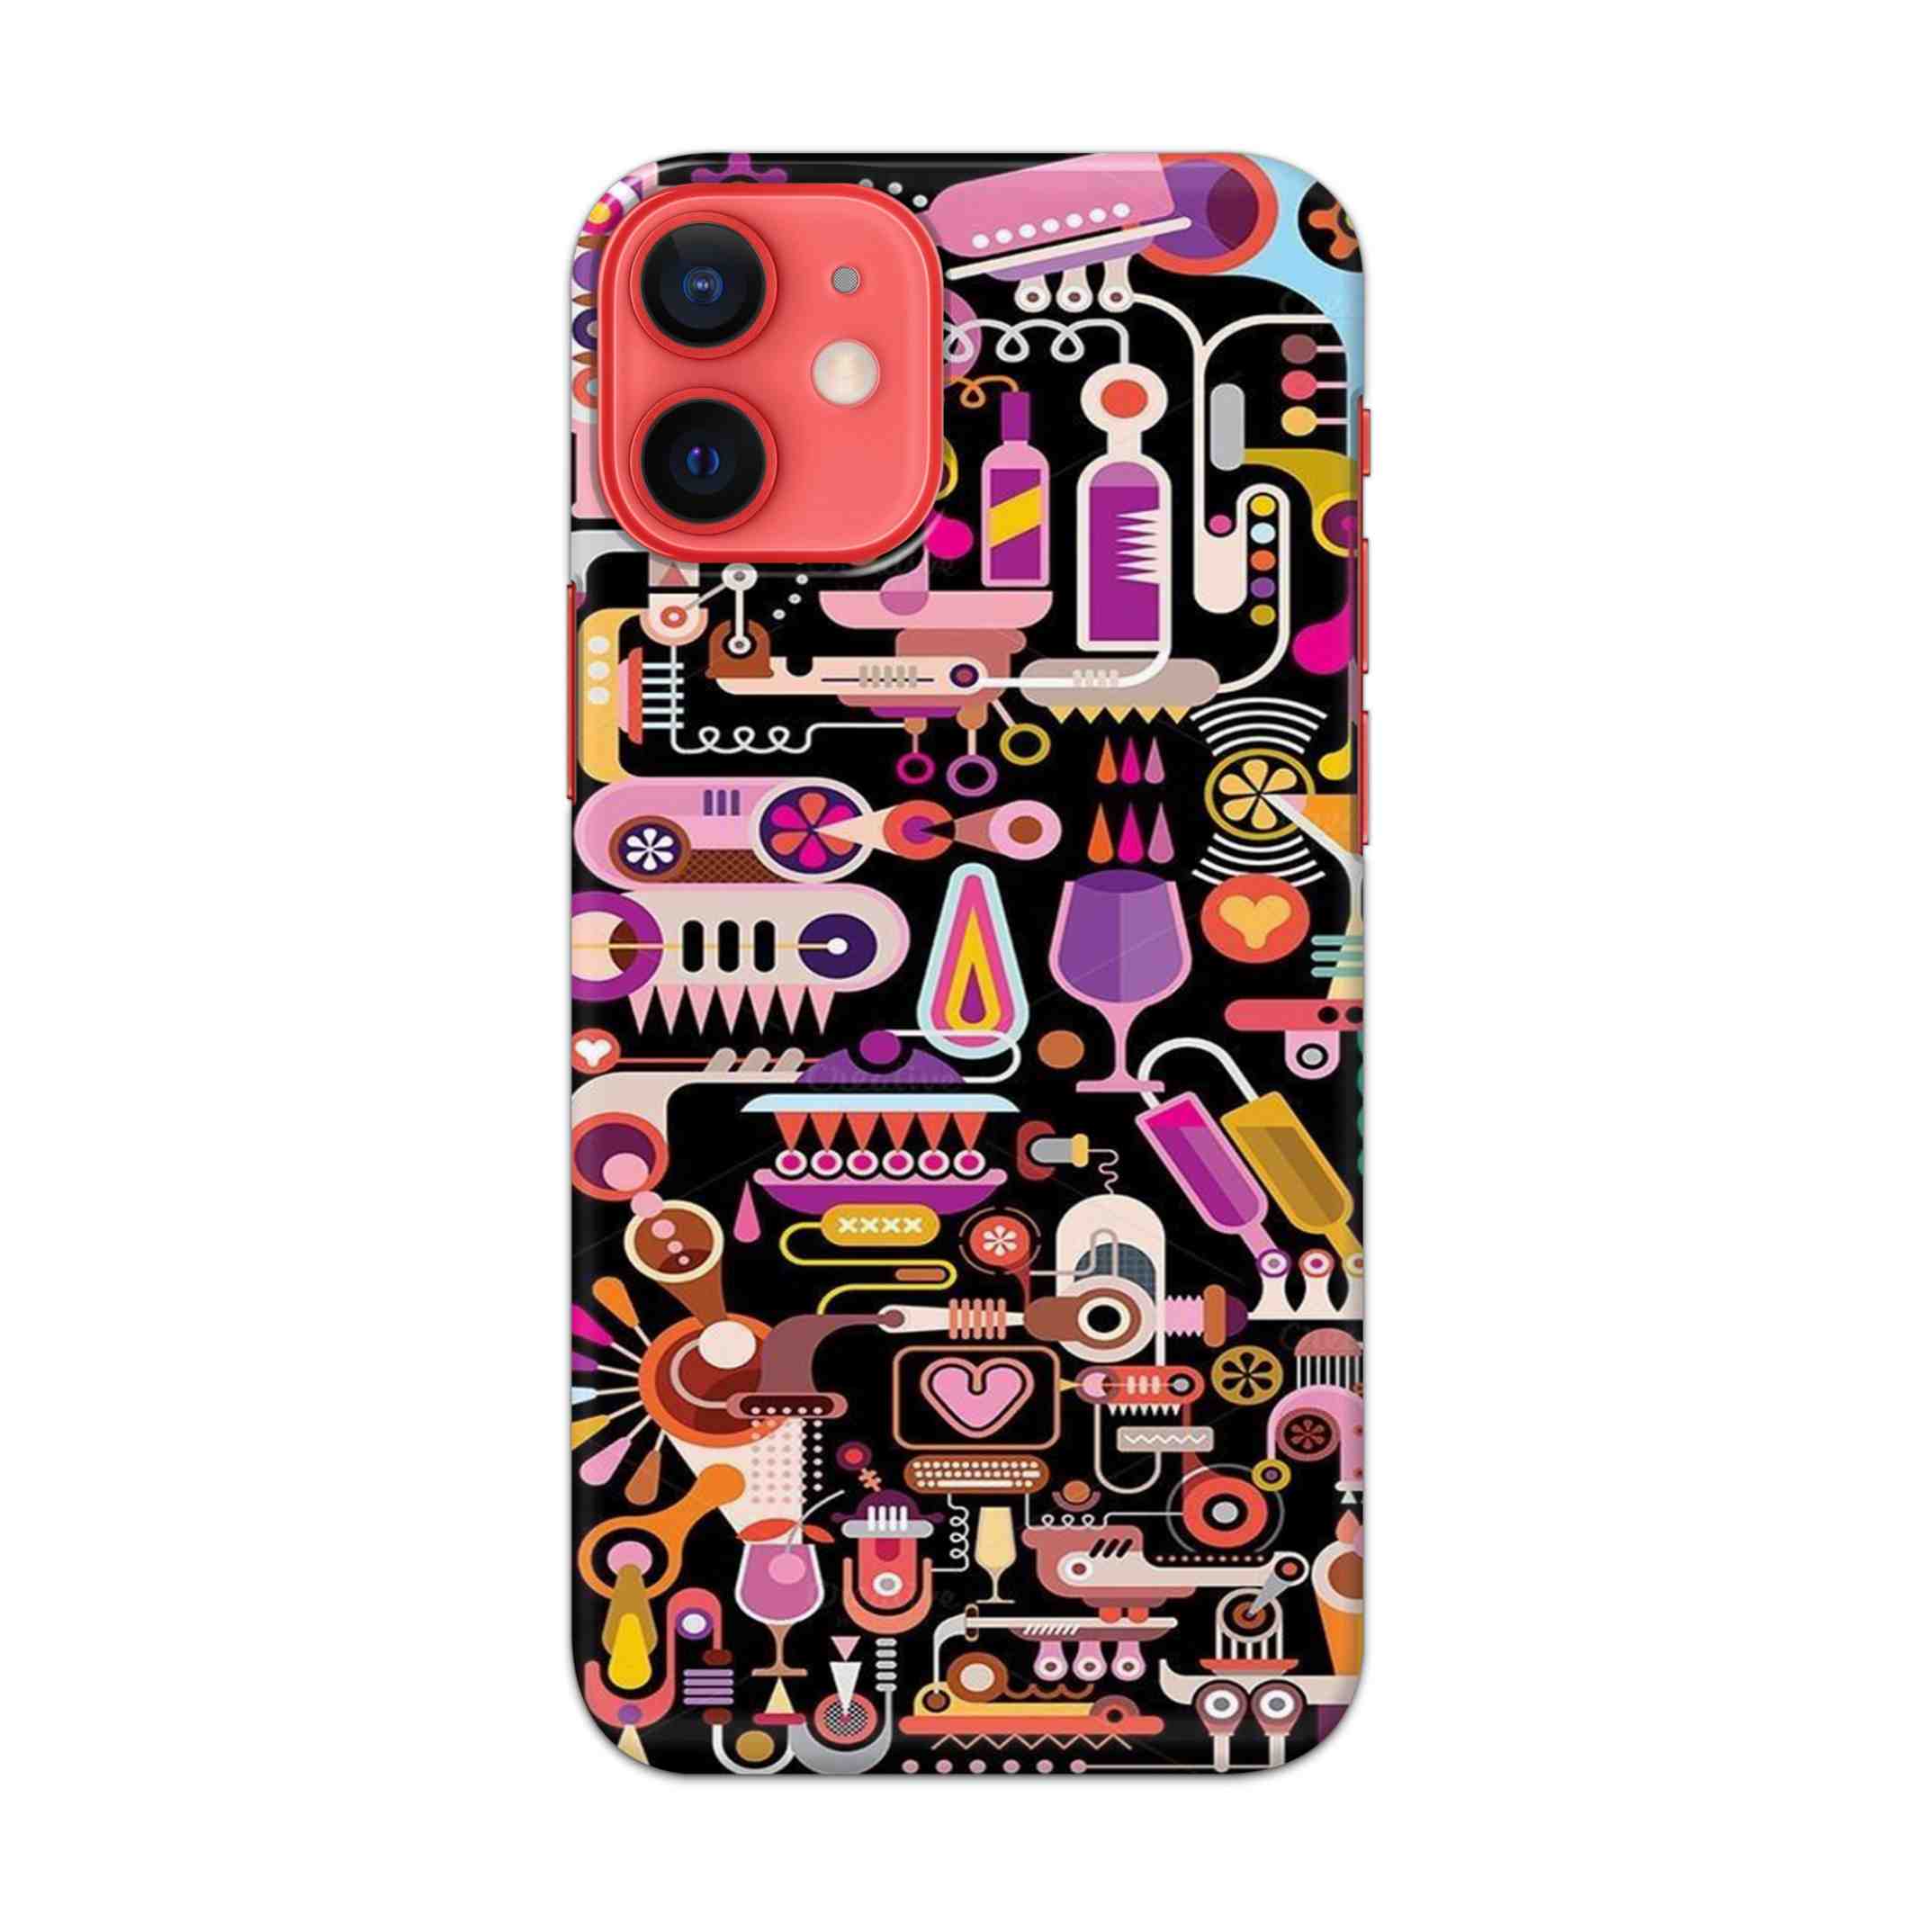 Buy Art Hard Back Mobile Phone Case/Cover For Apple iPhone 12 mini Online